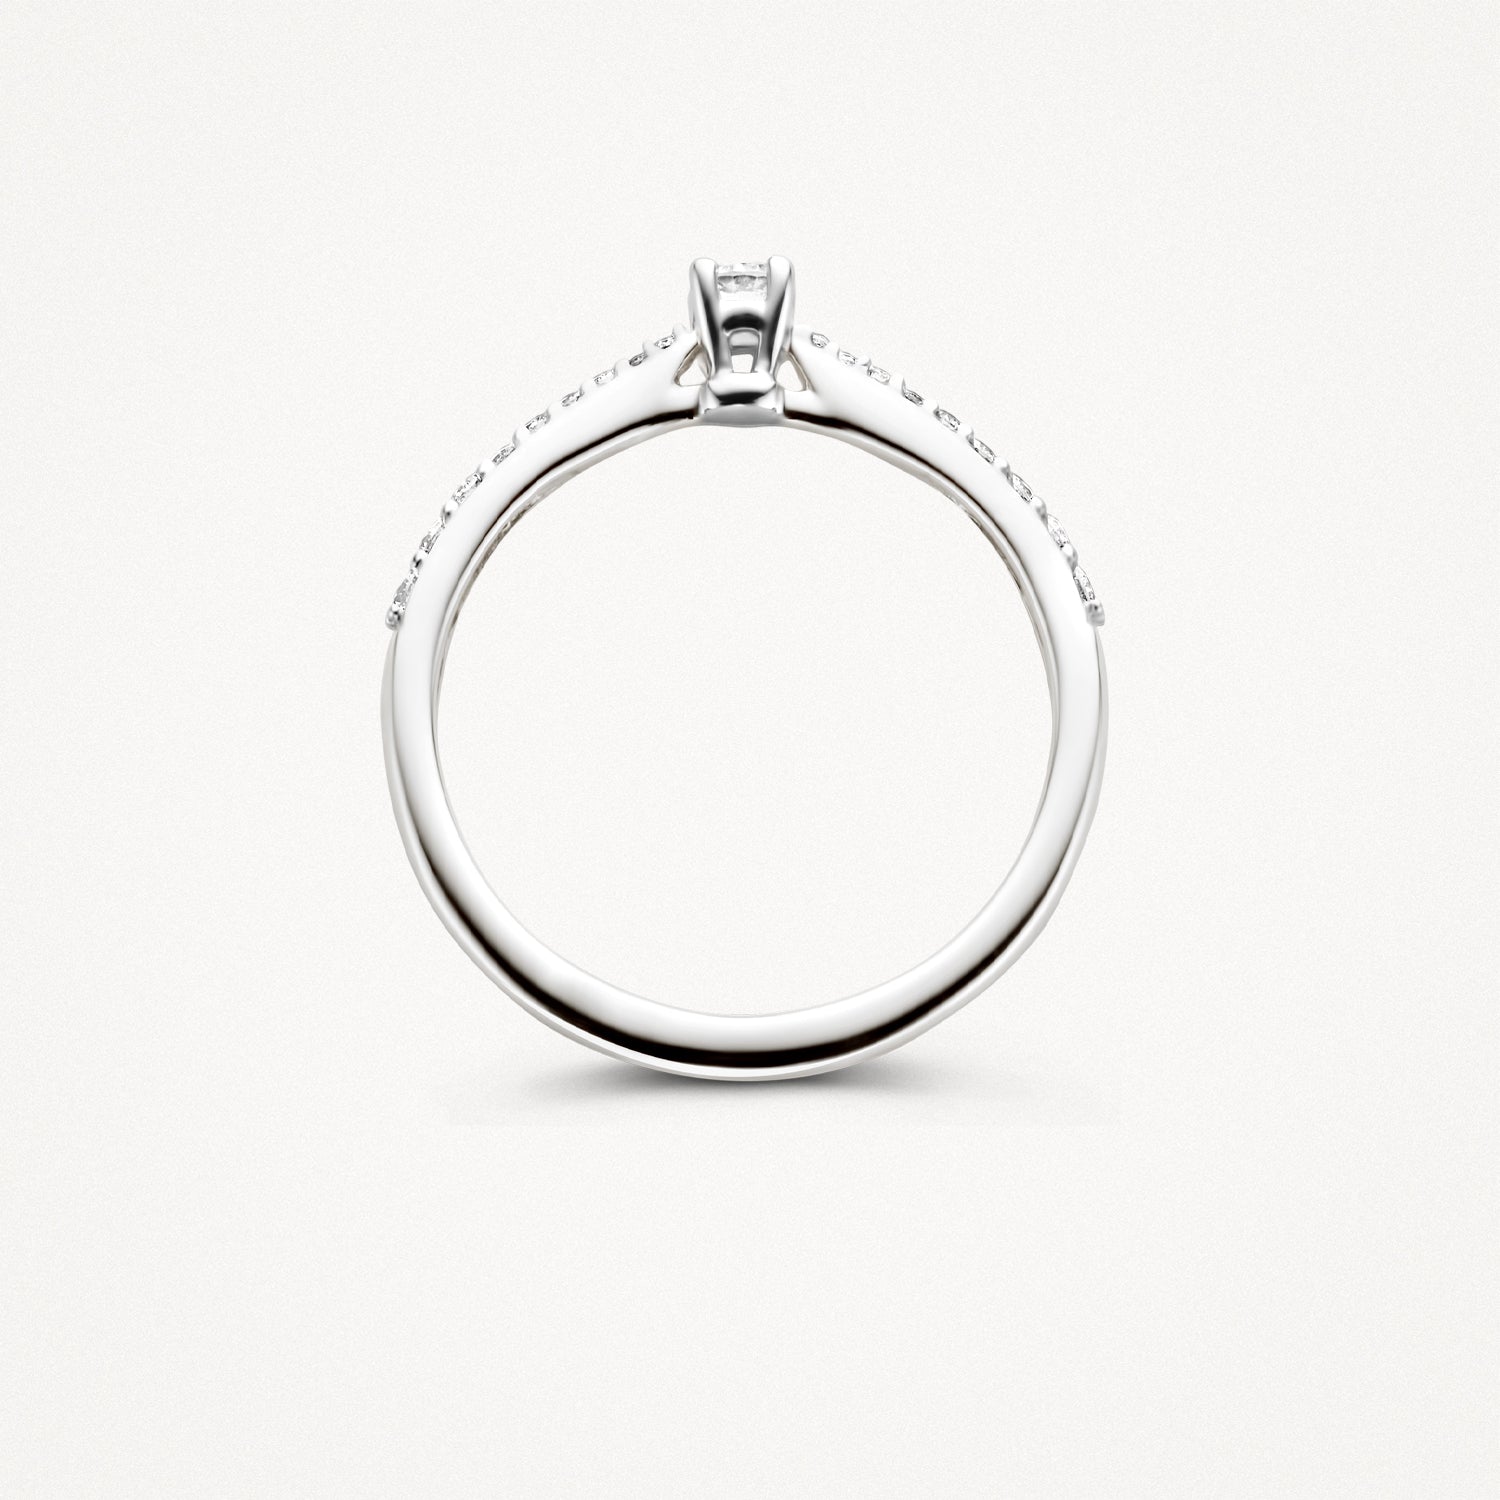 Ring 1658WDI - 14k Wit goud met Diamant